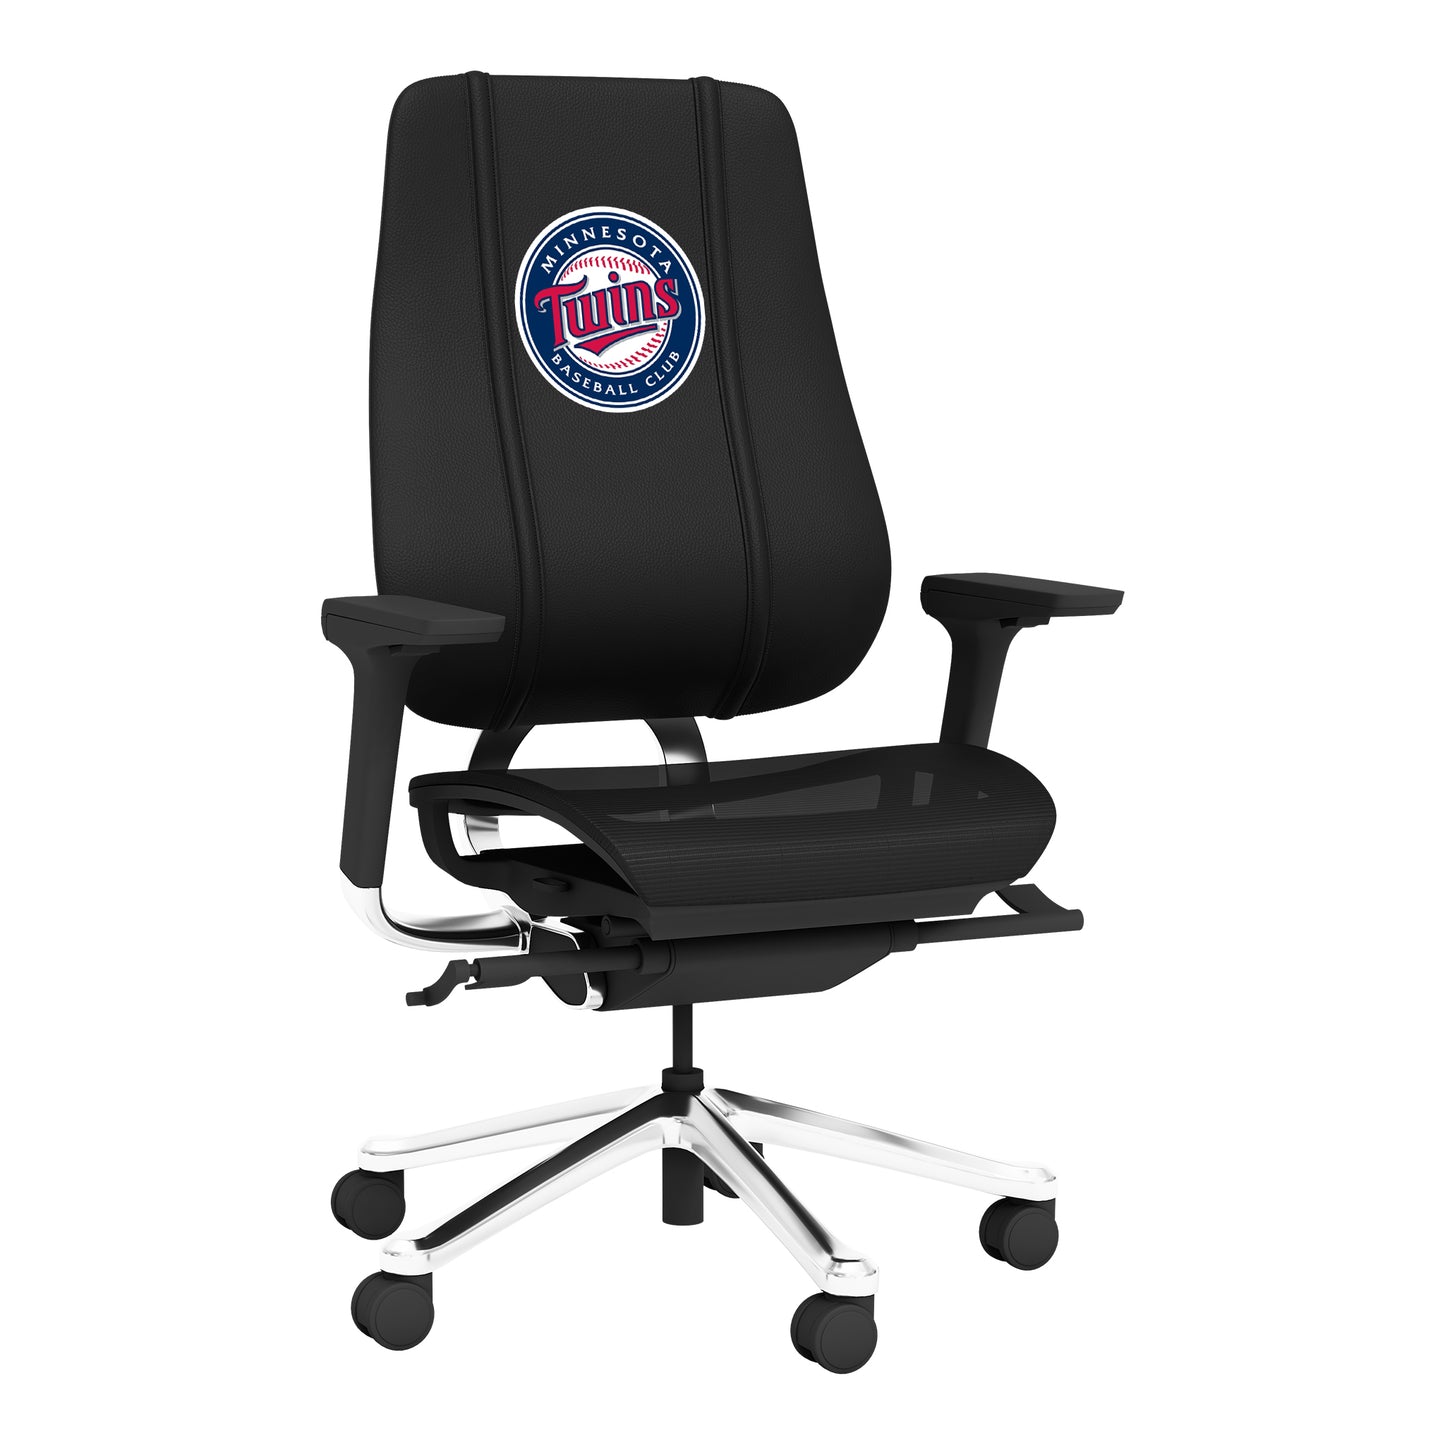 PhantomX Mesh Gaming Chair with Minnesota Twins Logo